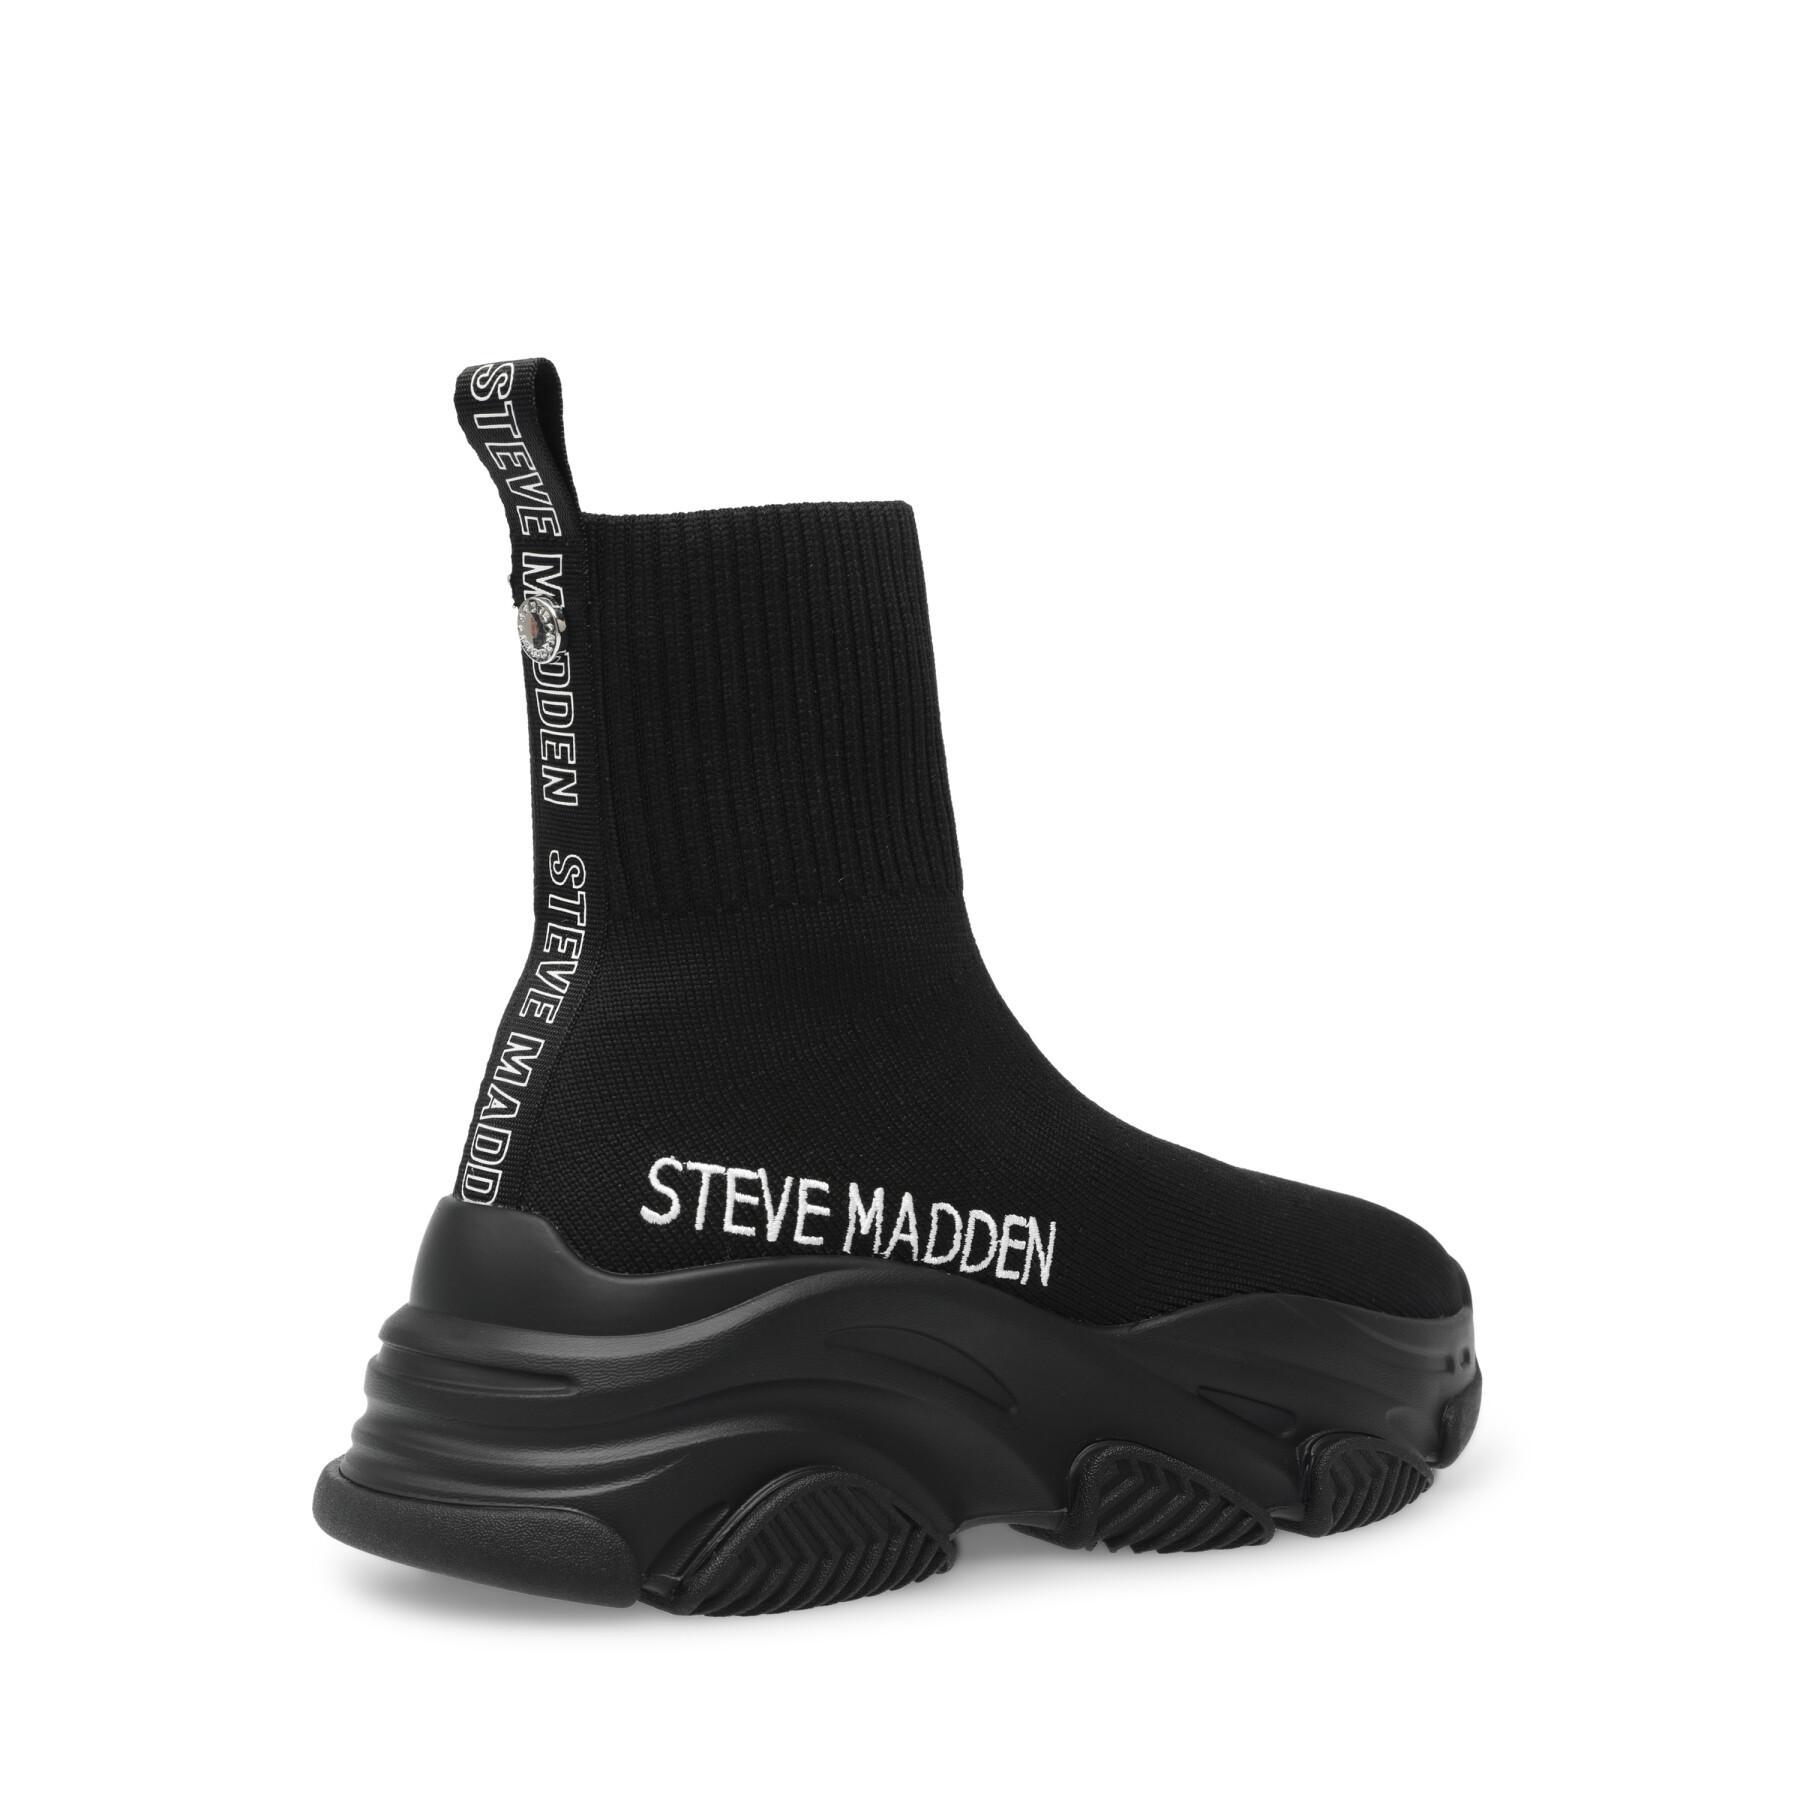 Zapatillas de deporte para mujeres Steve Madden Prodigy